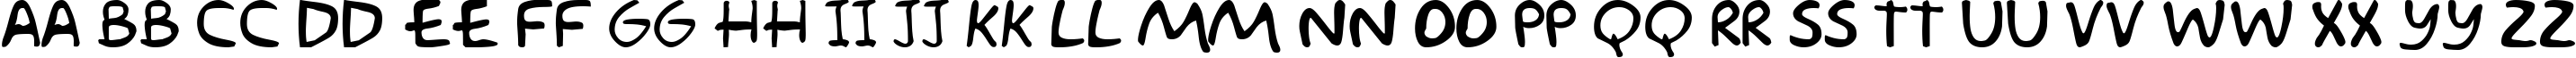 Пример написания английского алфавита шрифтом Groening Plain